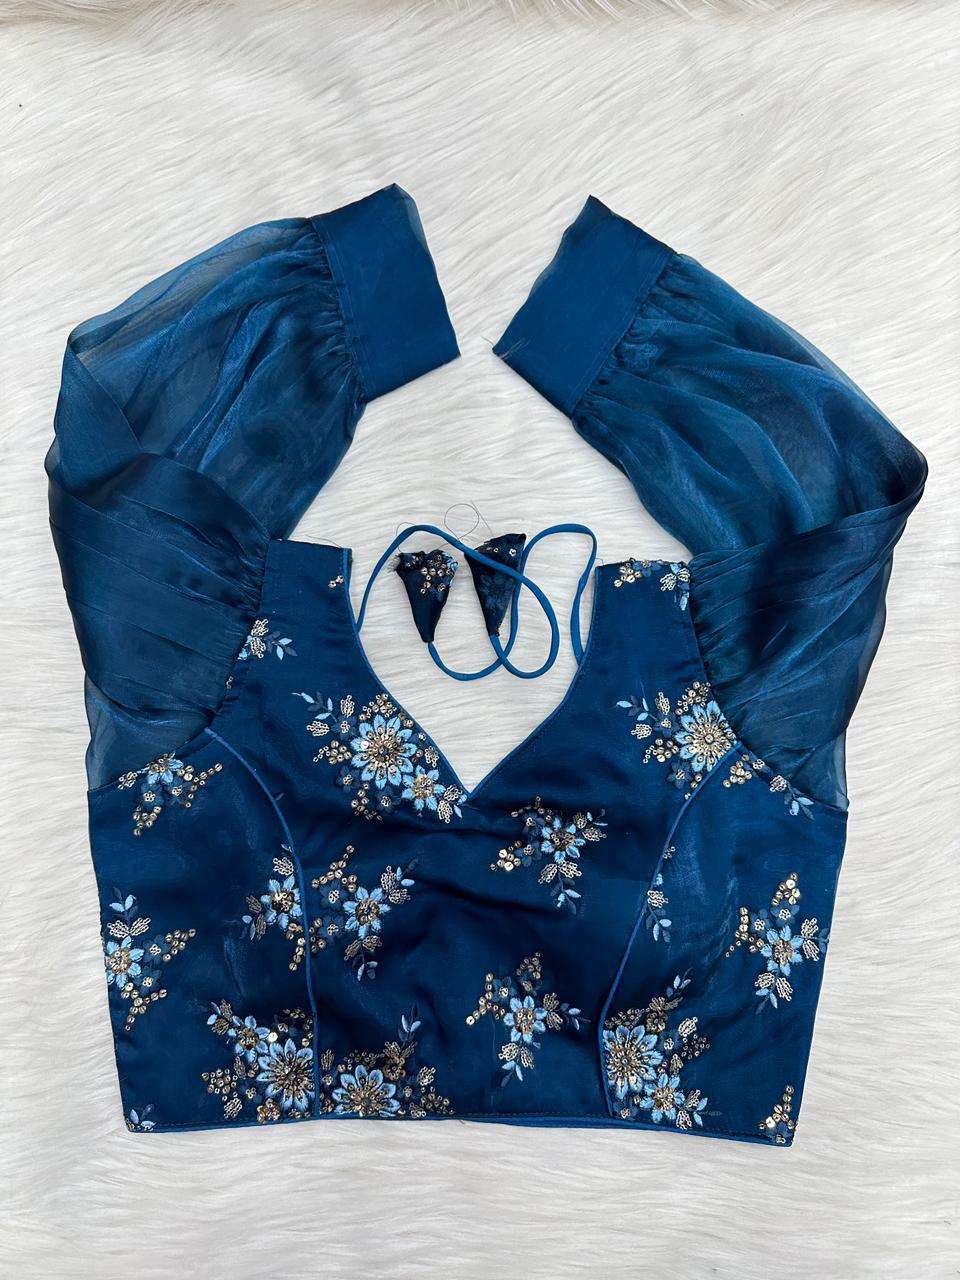 HKS - zimichoo5 designer ZimiChooo Blooming Organza blouse